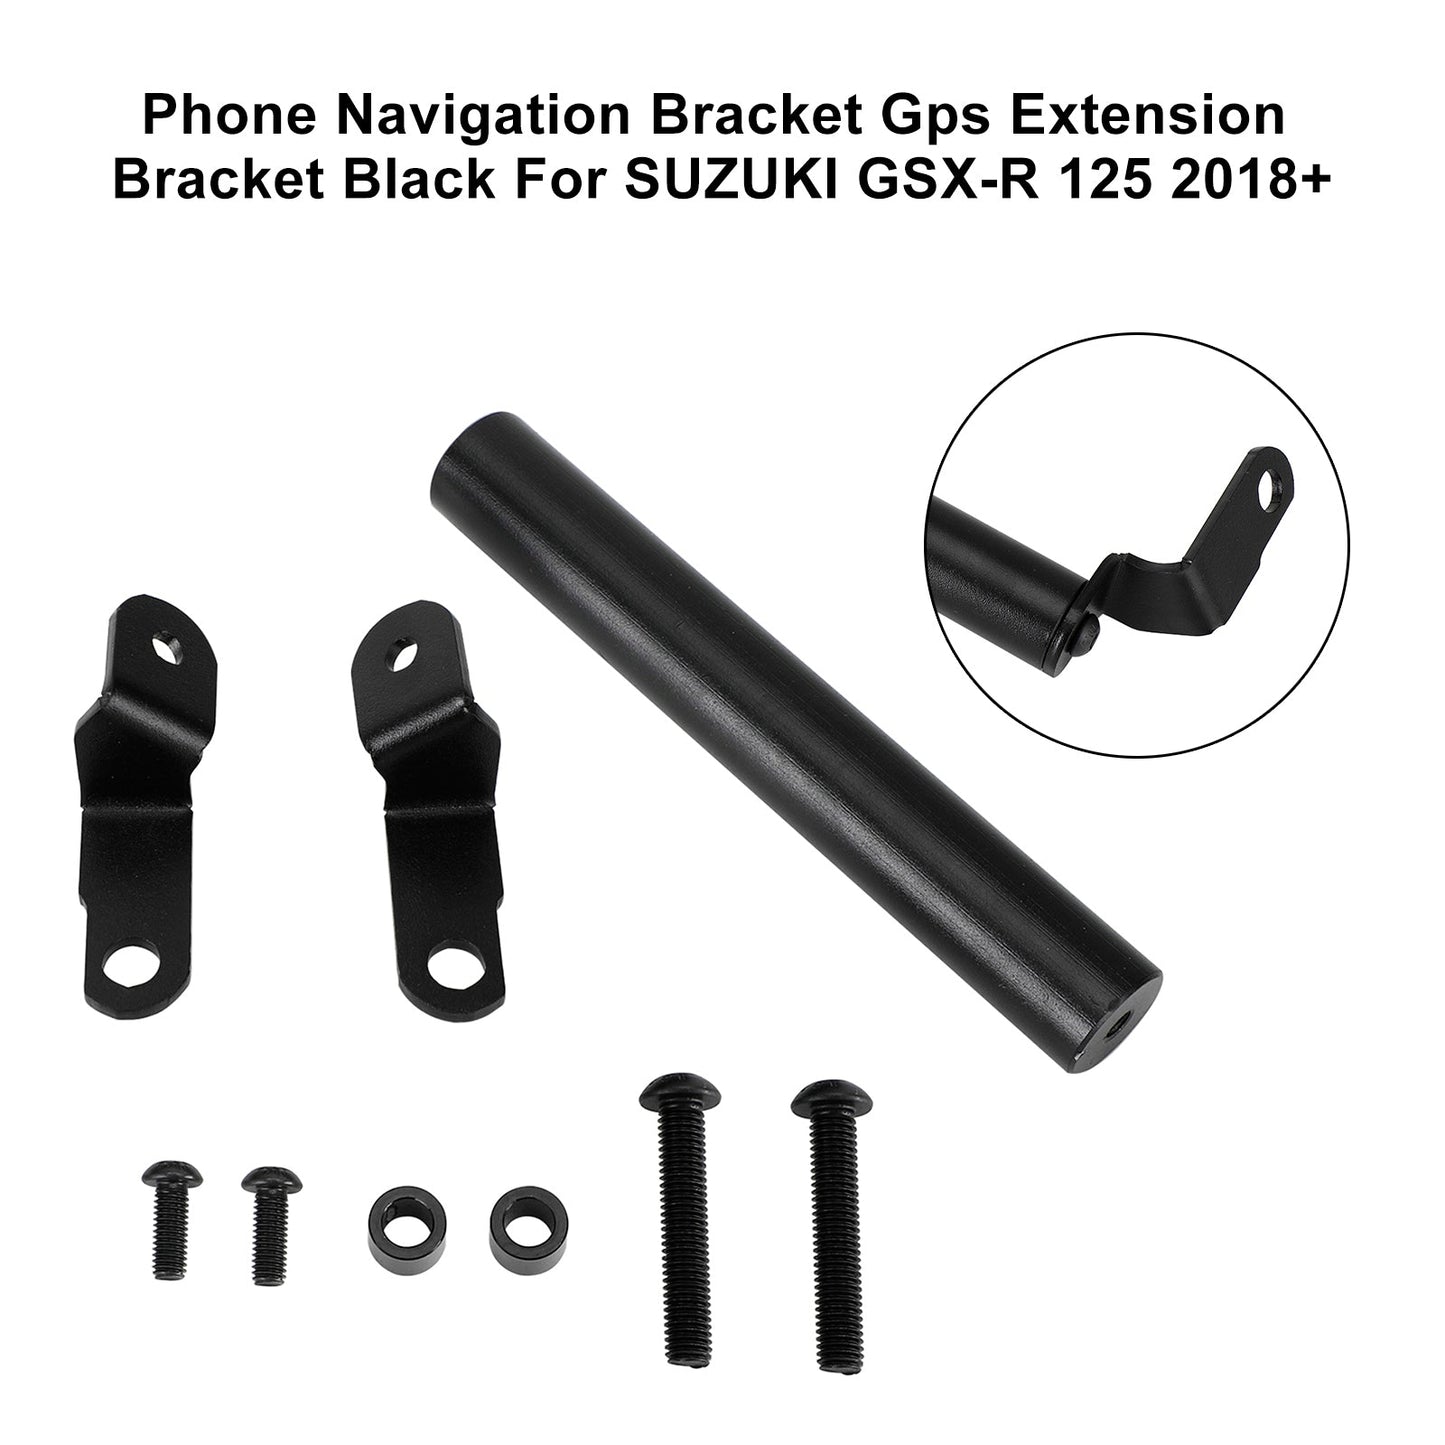 Suzuki Gsx-R 125 2018+ Gps Extension Bracket Phone Navi Bracket Black